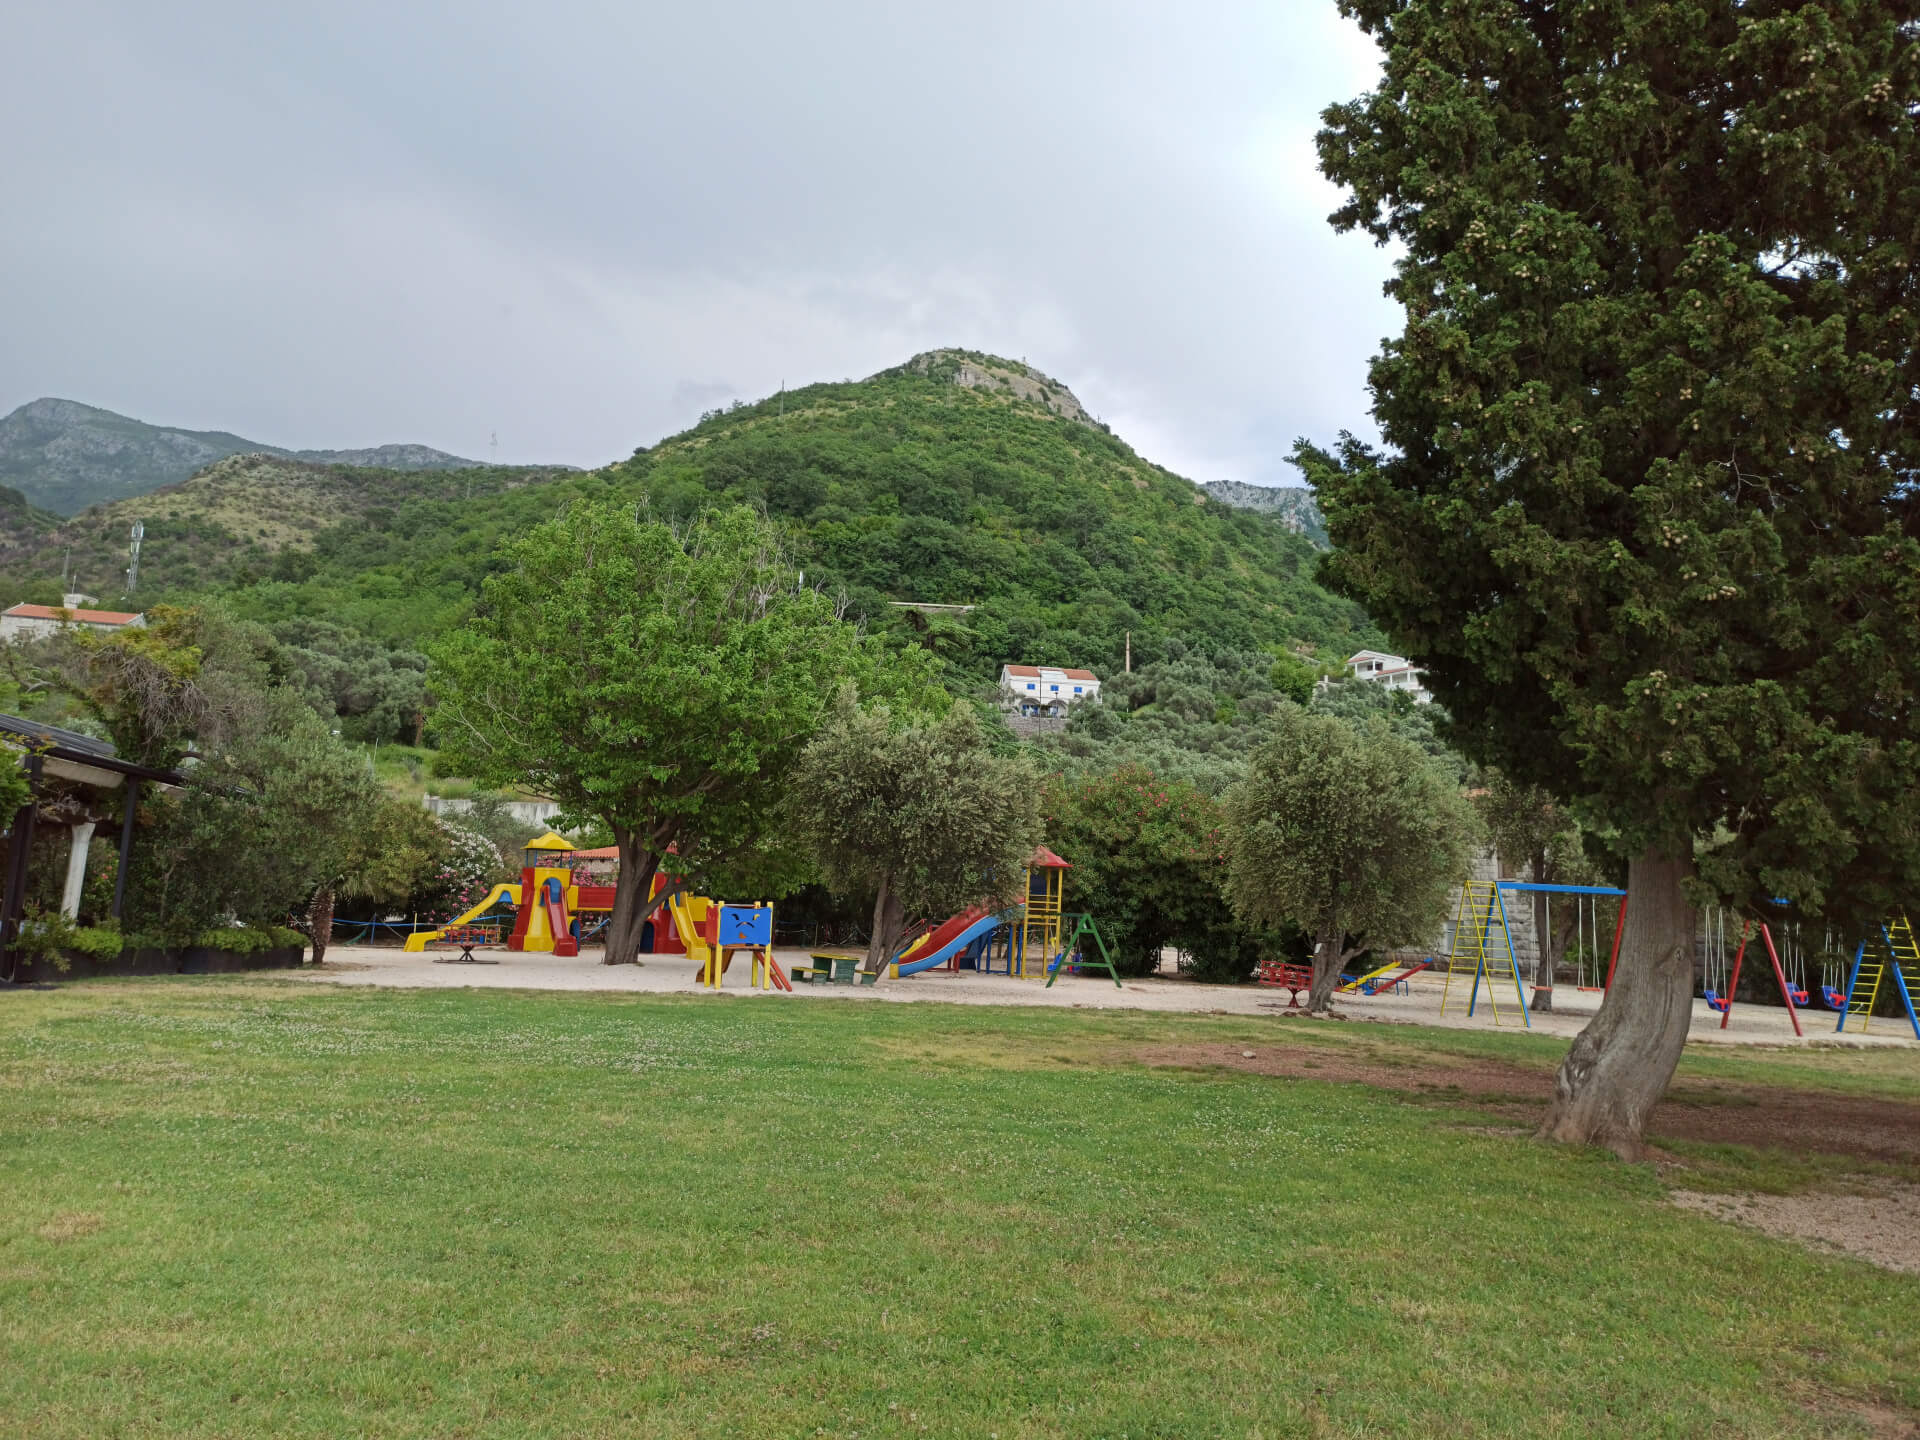 Playground for kids in the park Sveti Stefan